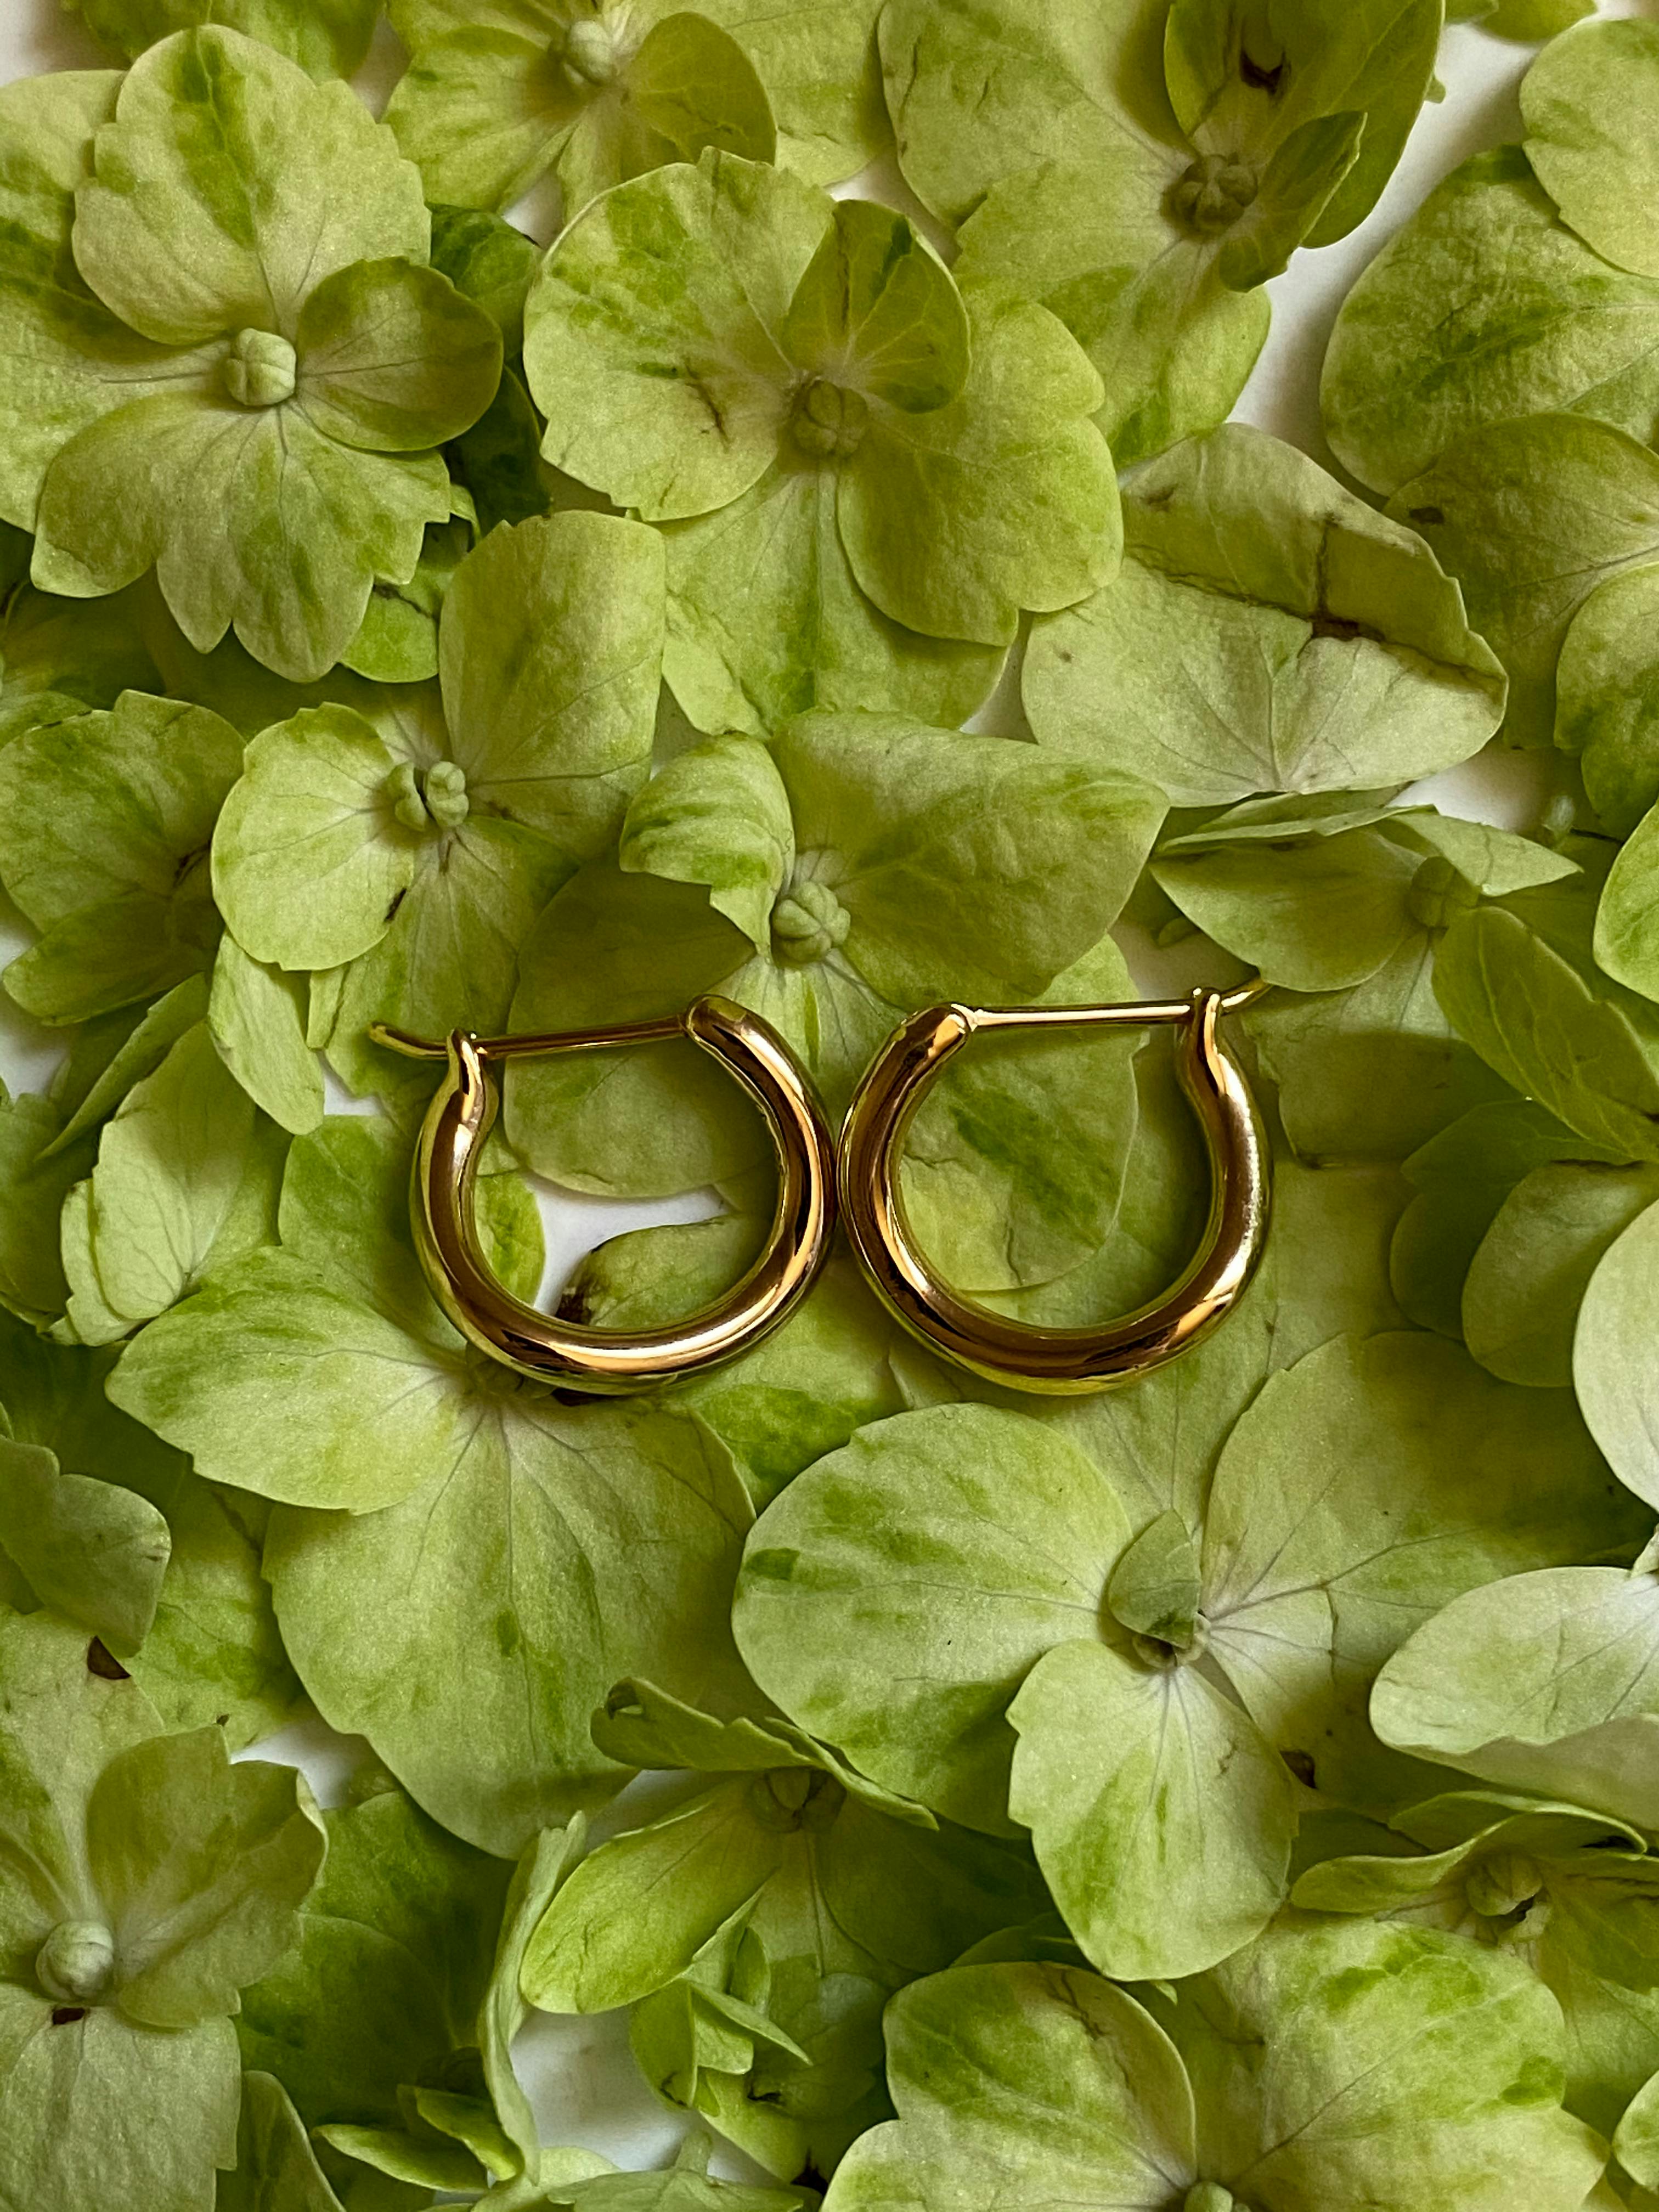 golden earrings placed on light green petals